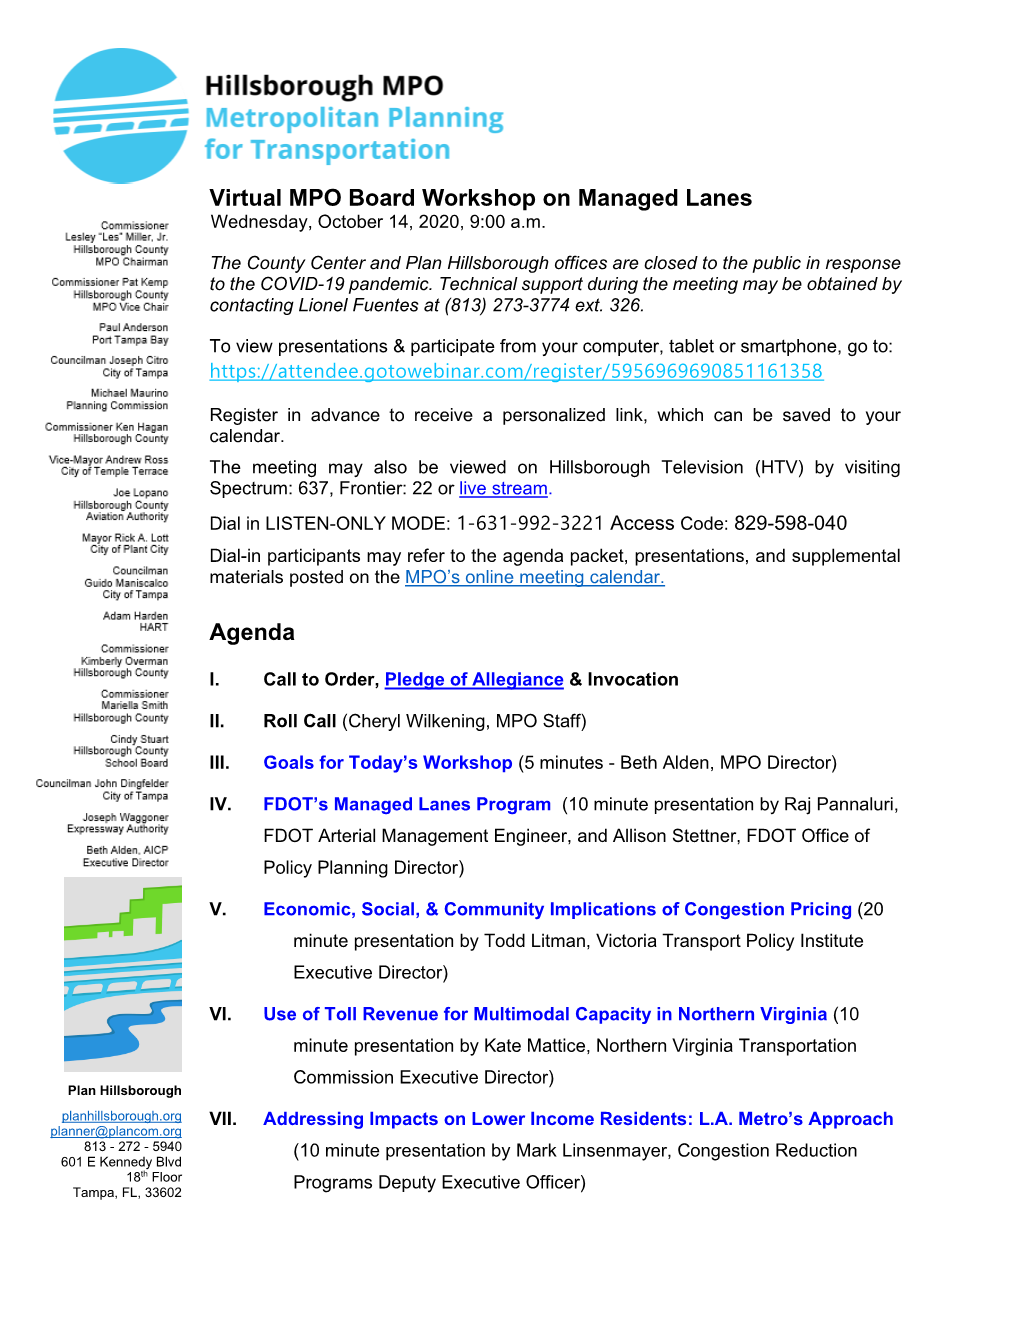 Virtual MPO Board Workshop on Managed Lanes Agenda